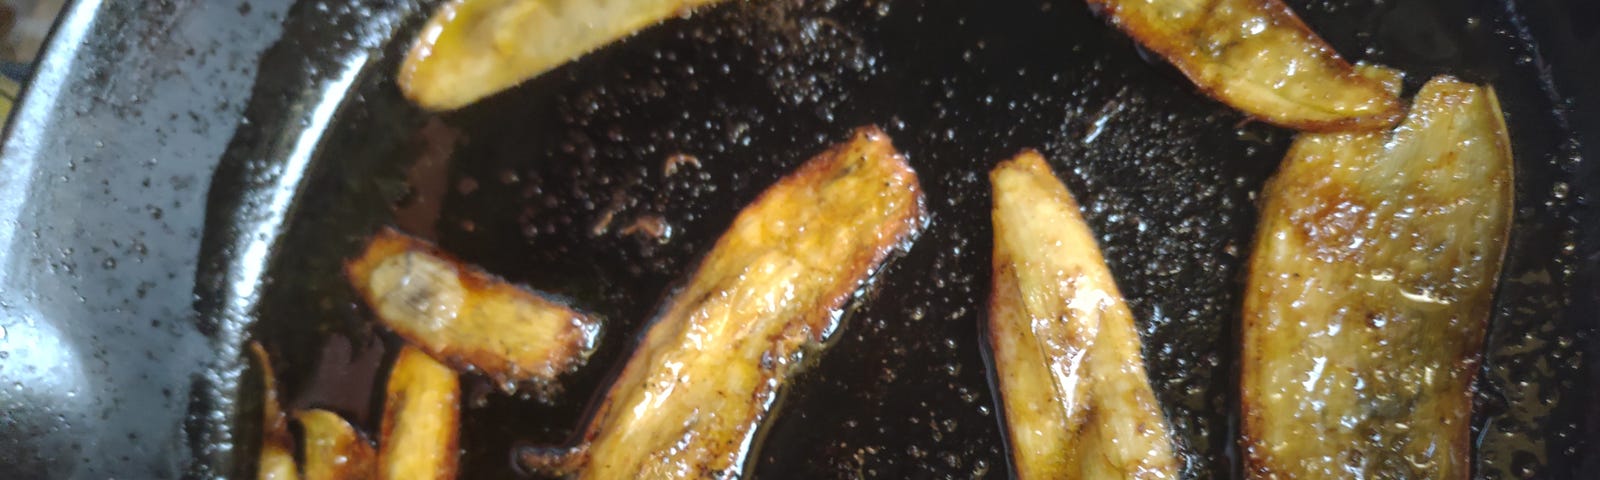 banana peels cooking in cast iron pan